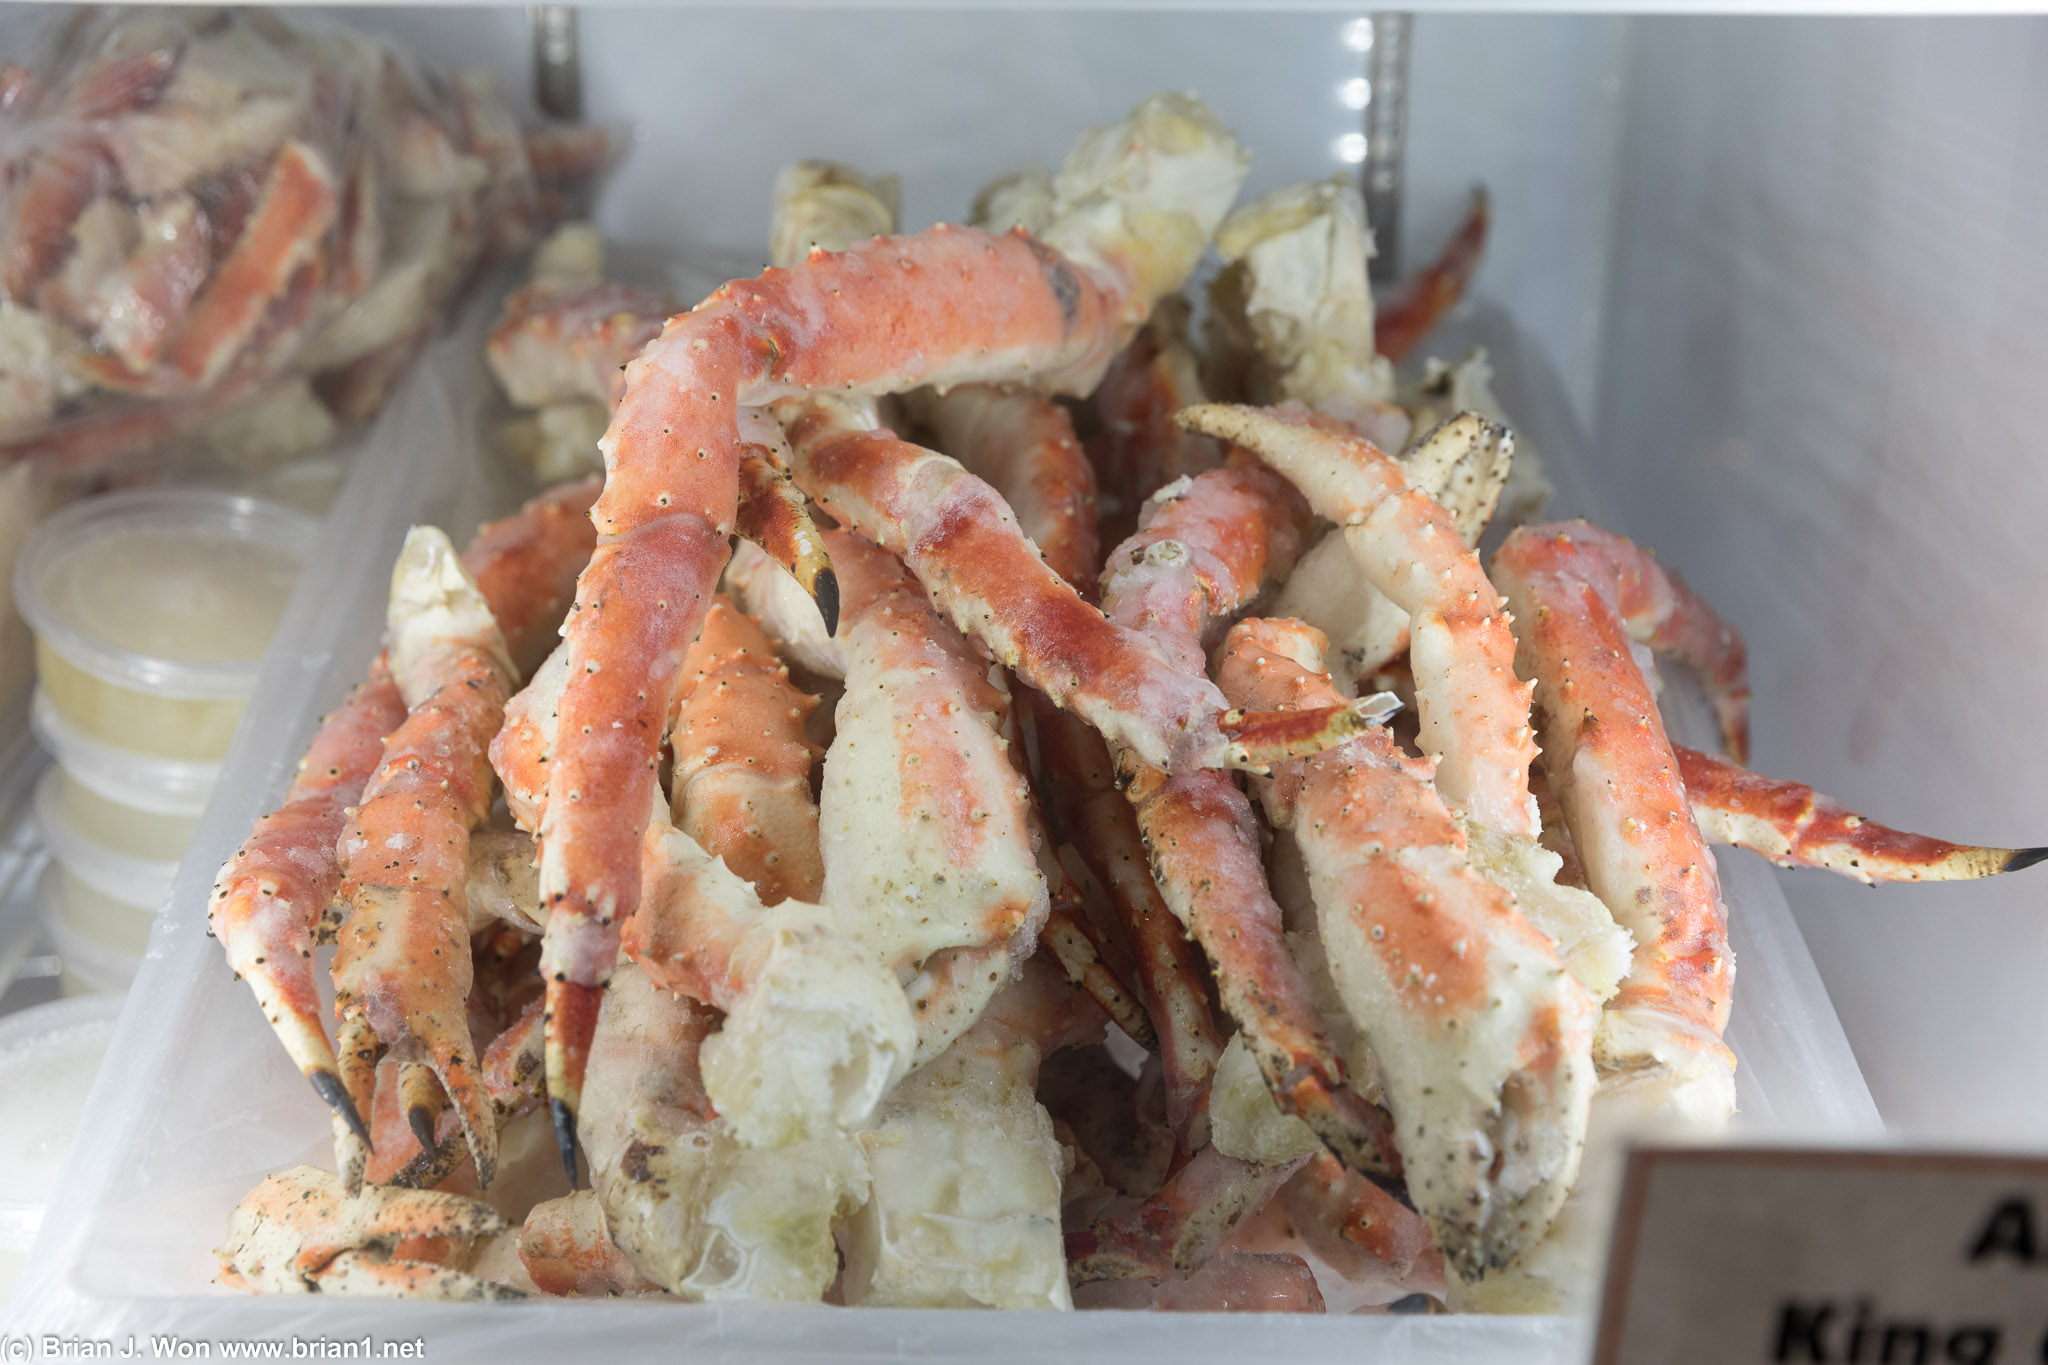 King crab legs at Fresh Fish Co.